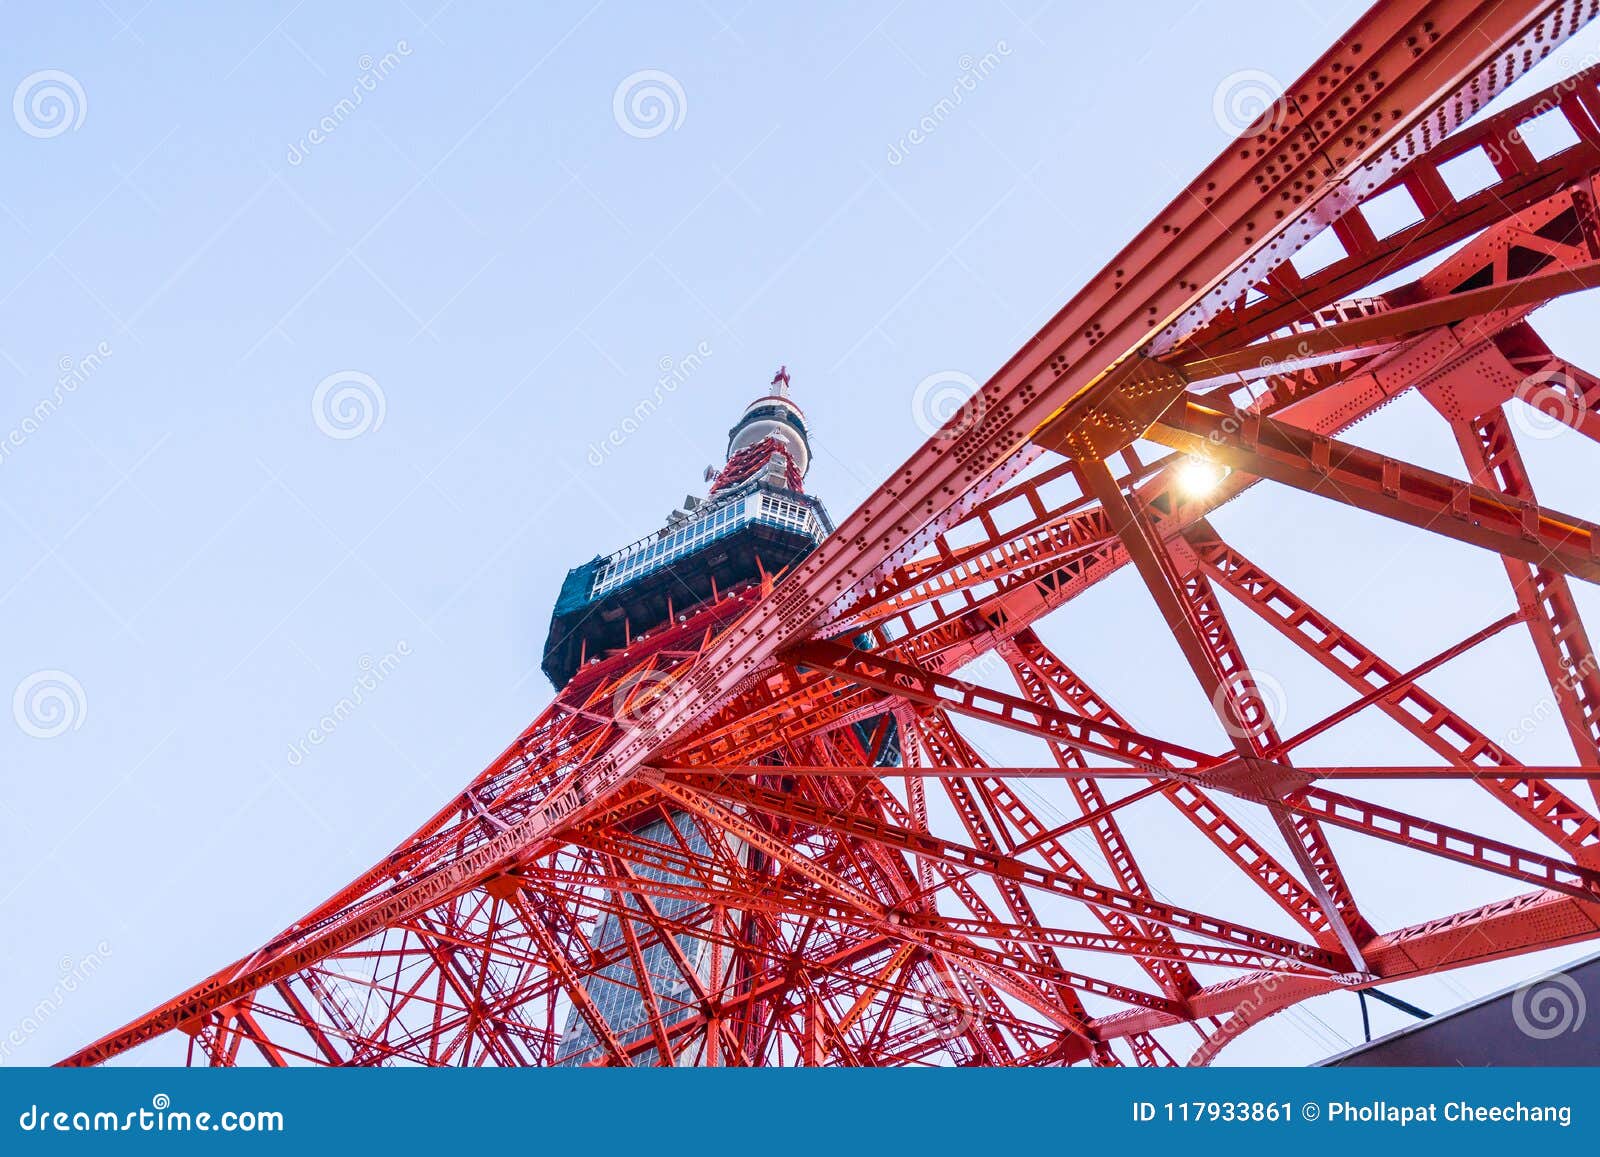 Tokyo Tower A Major Tourist Attraction In Kanto Region Tokyo